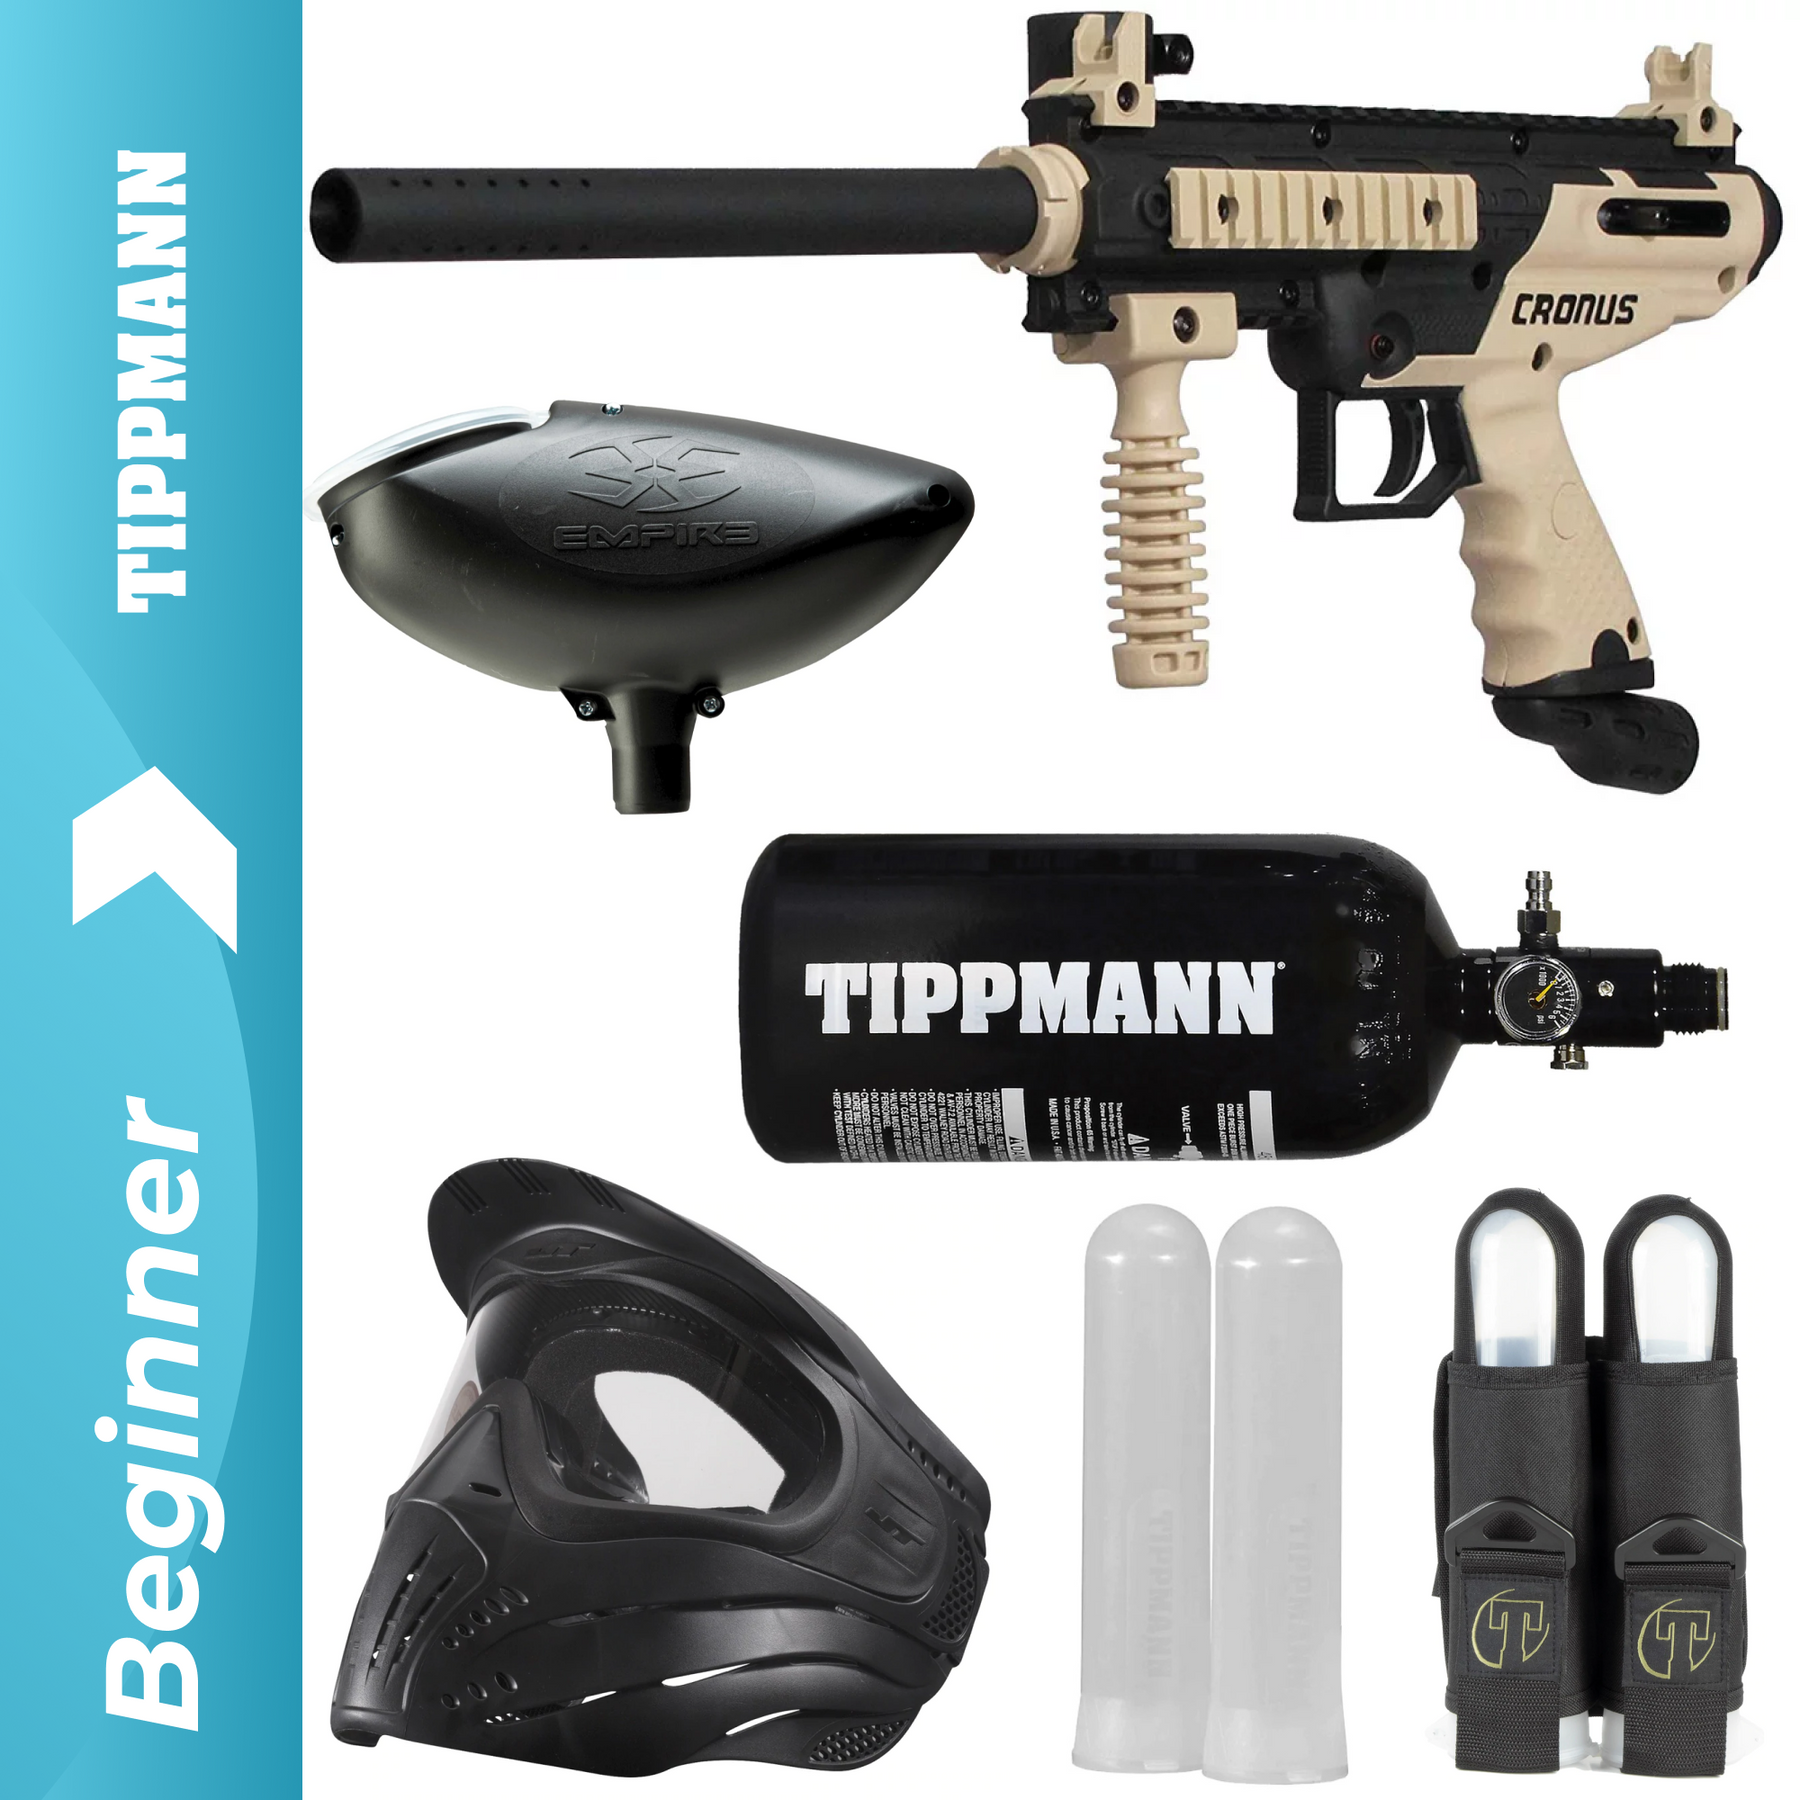 Tippmann Cronus Powerpack Paintball Gun Kit